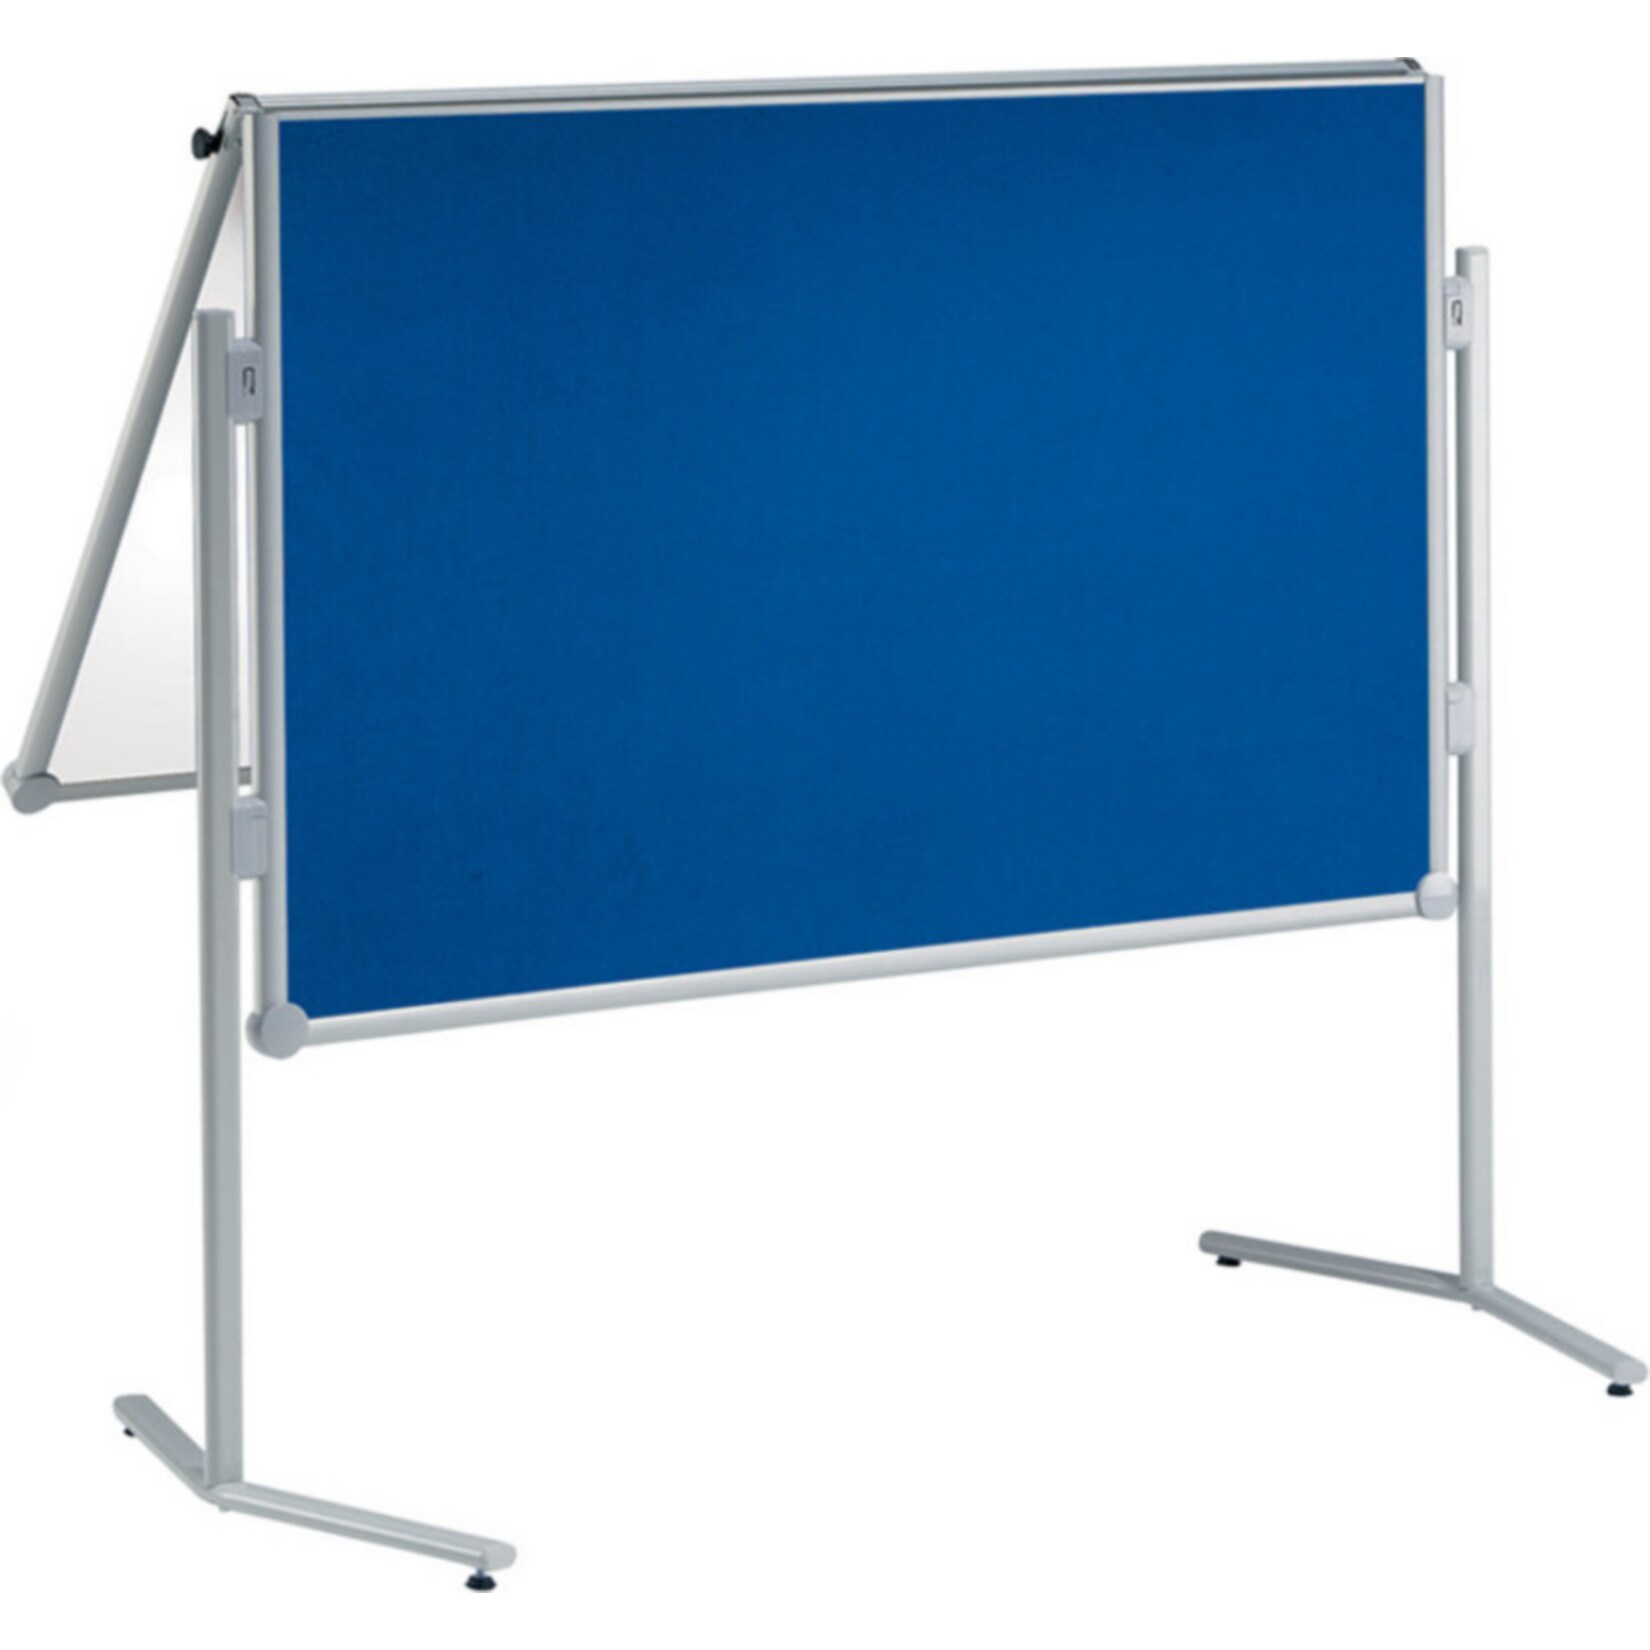 MAUL Moderationstafel MAULpro, klappbar - Textil blau /Whiteboard